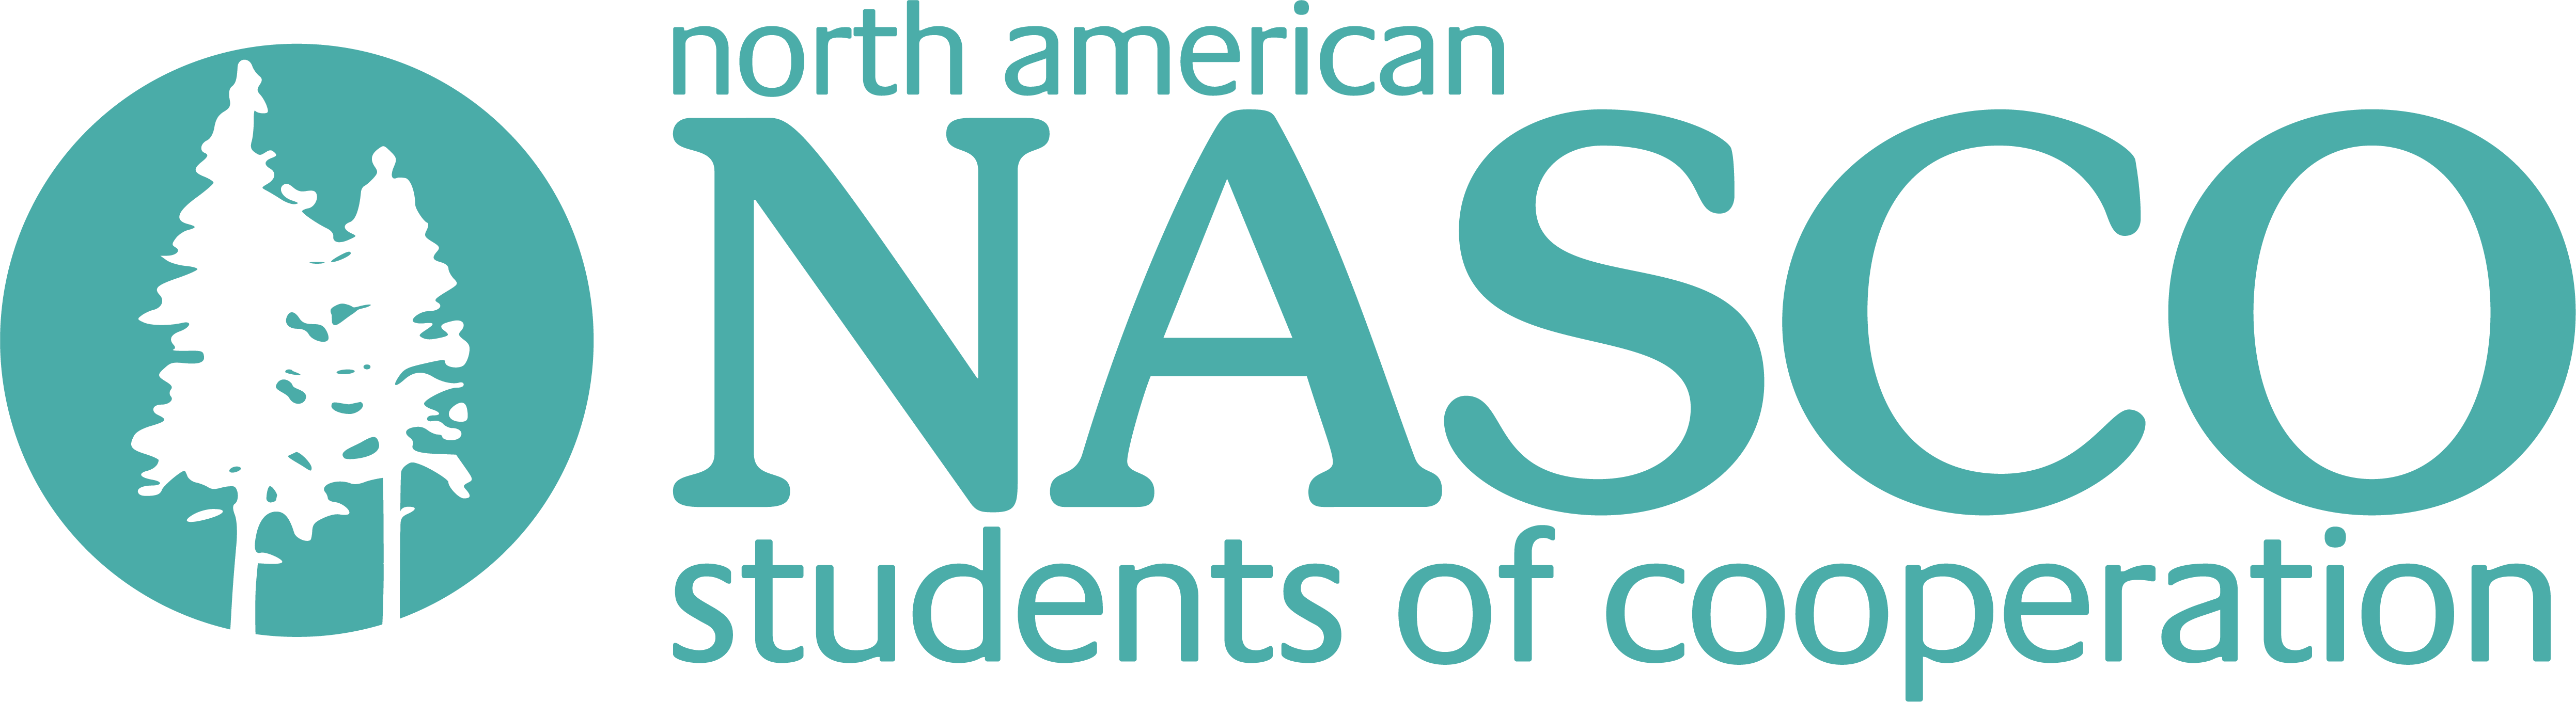 NASCO Logo